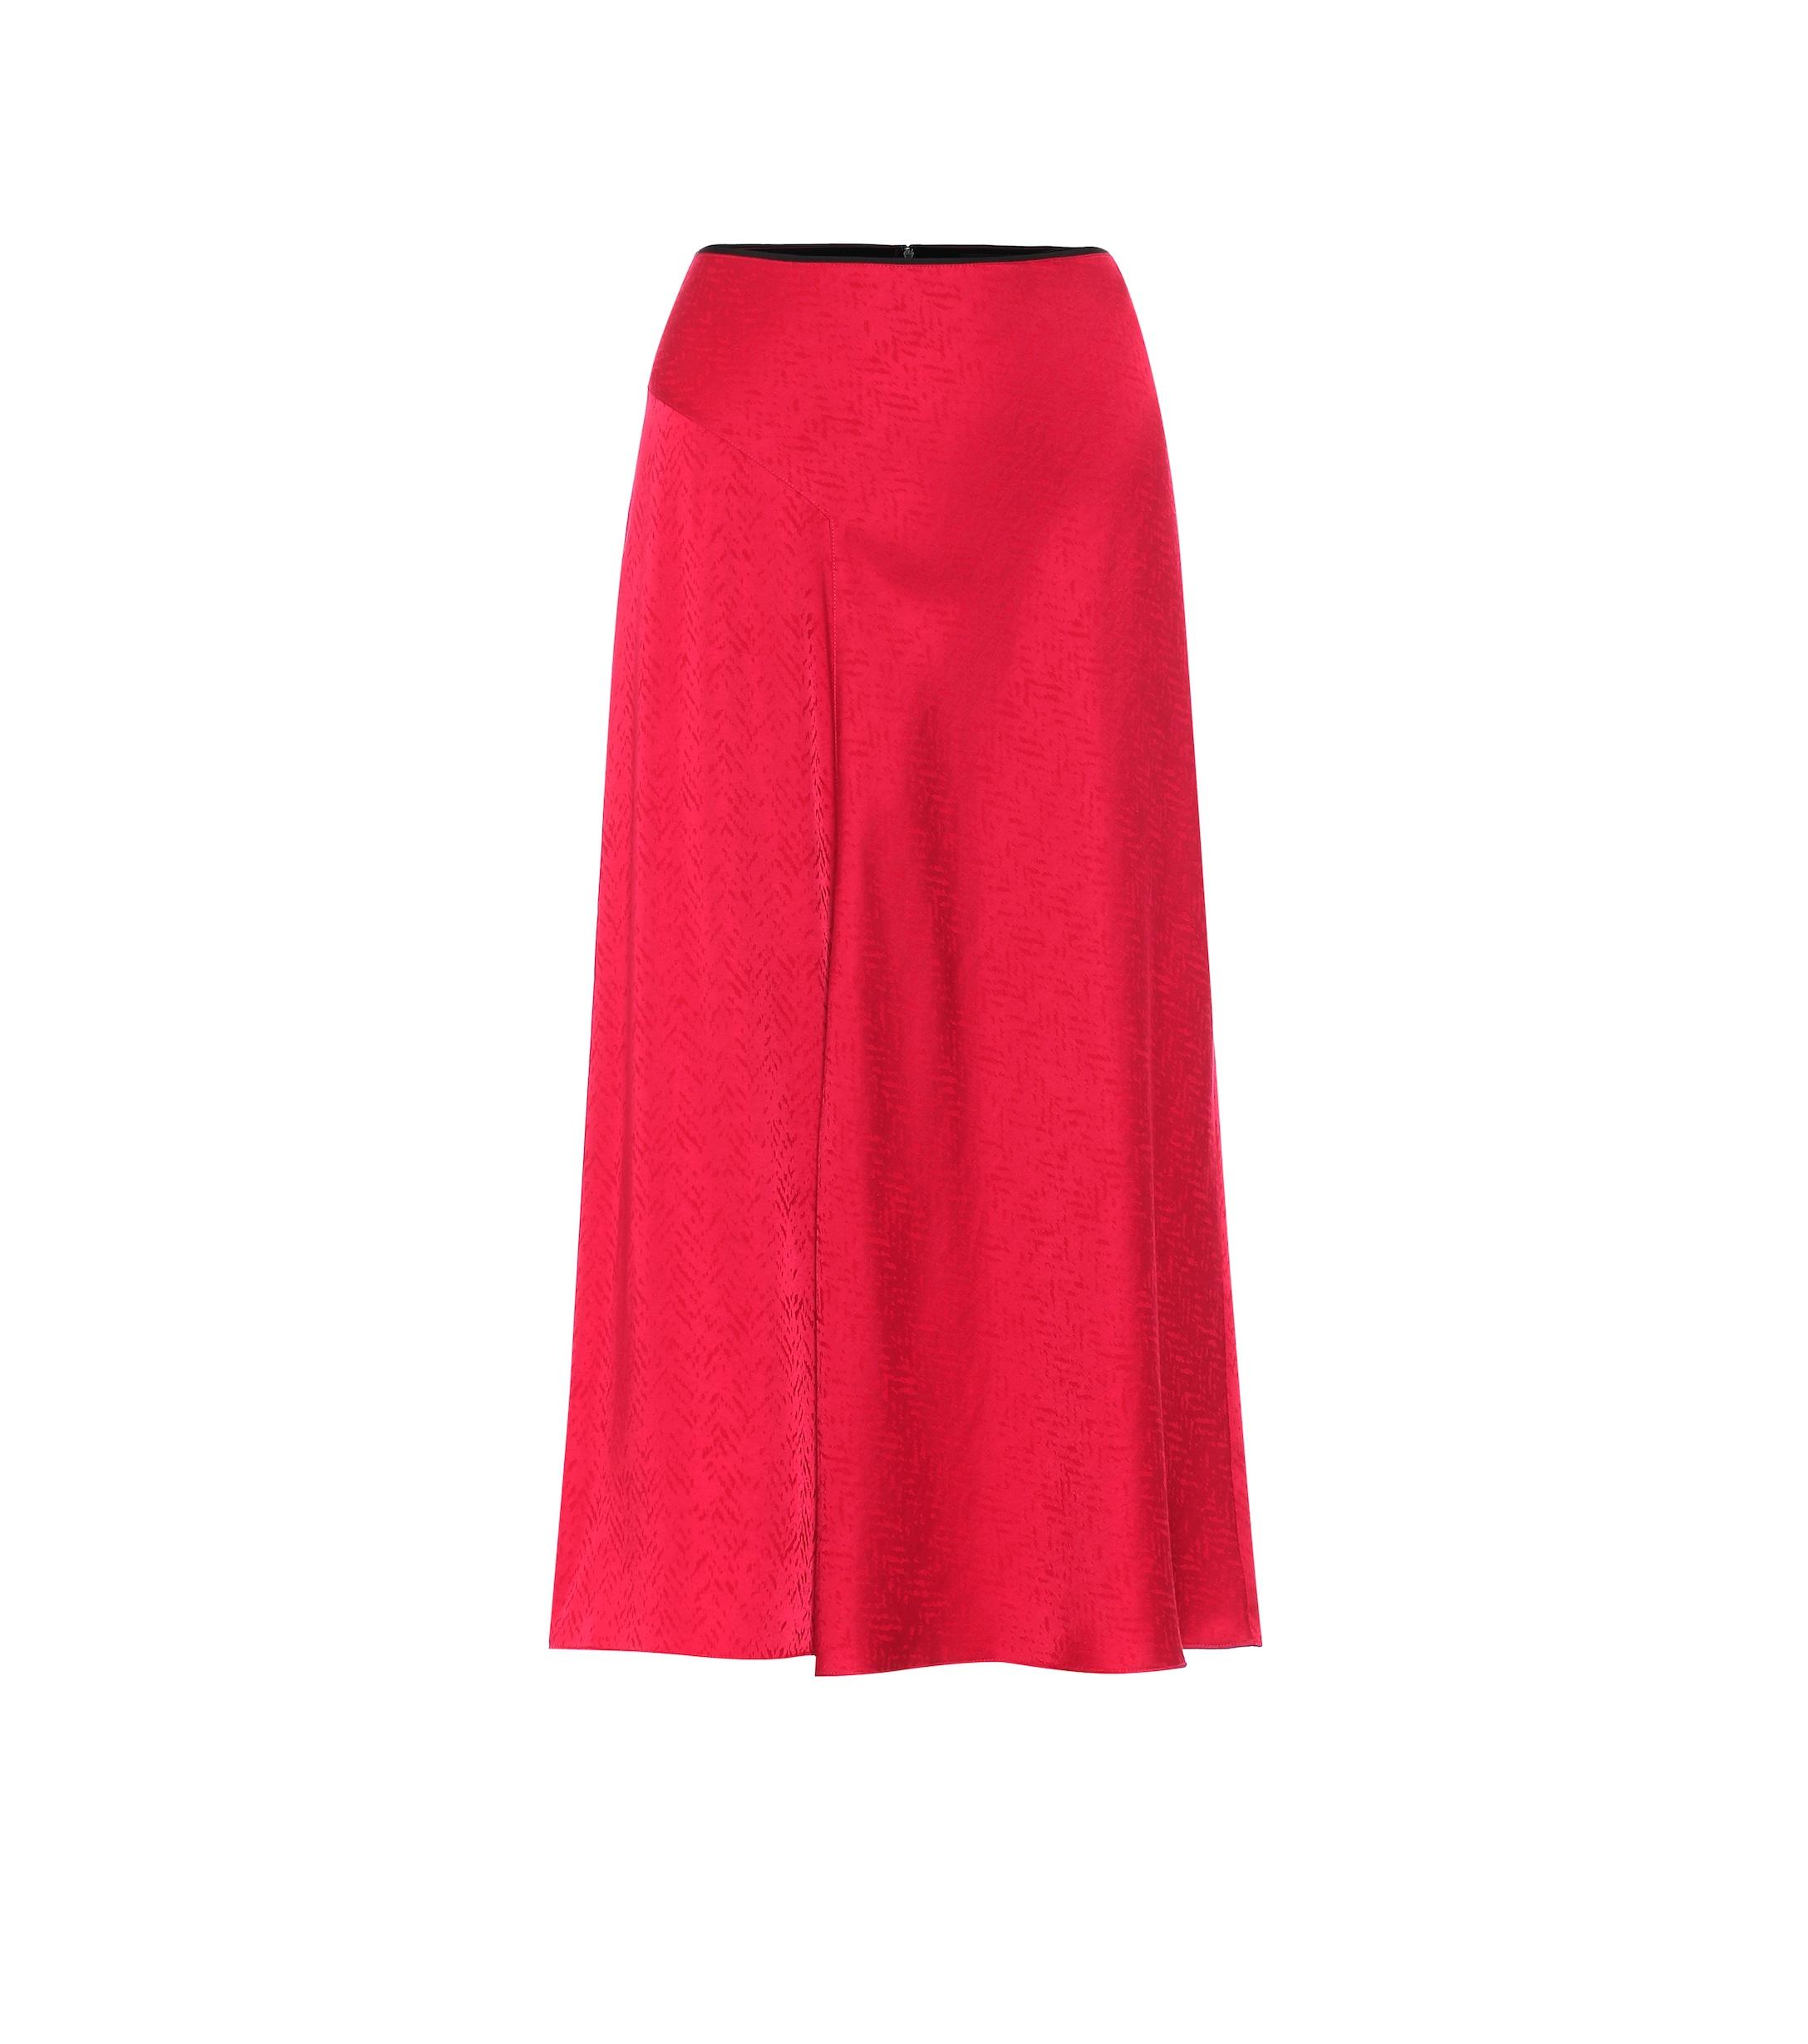 Rag & Bone Letti Jacquard Midi Skirt in Red - Lyst